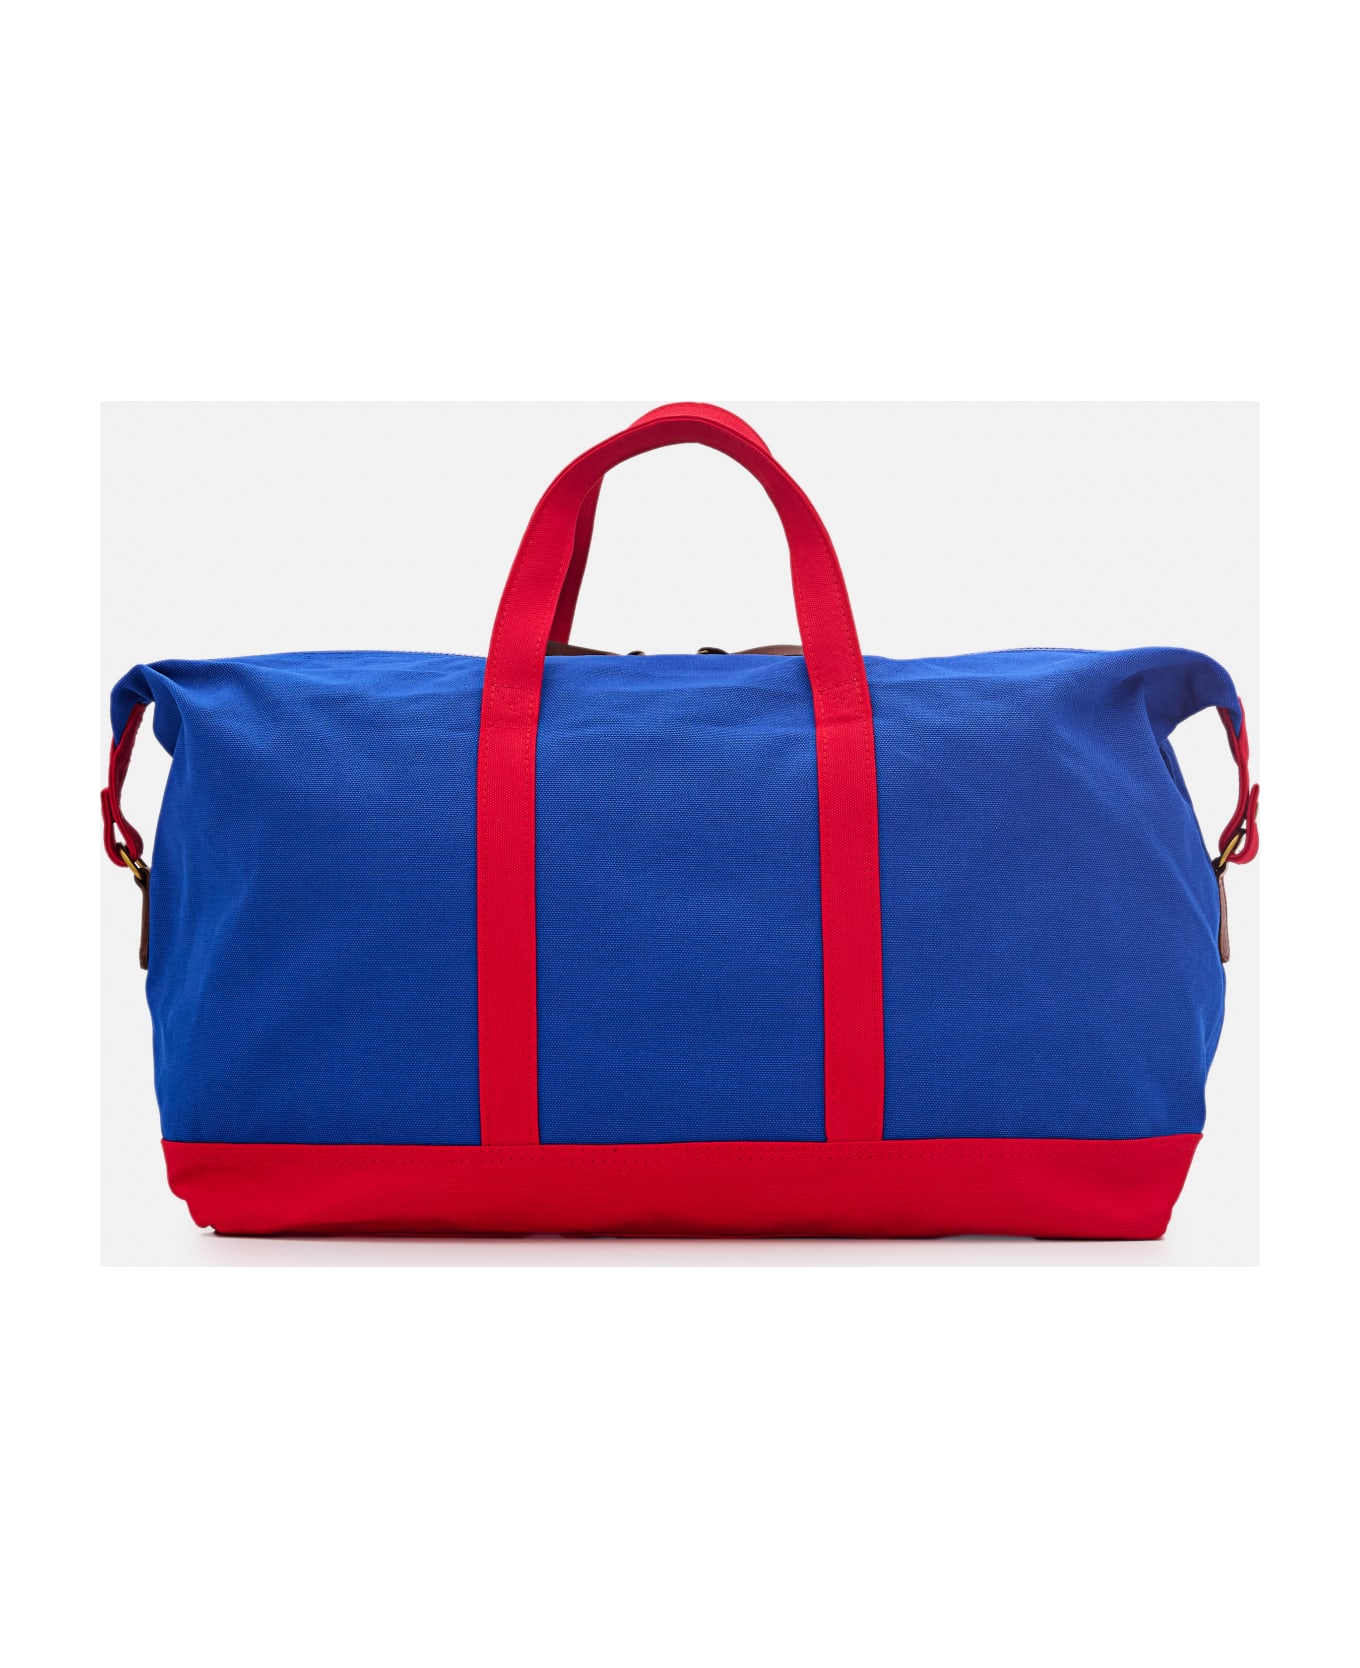 Polo Ralph Lauren Duffle Large Travel Bag - Blue トラベルバッグ